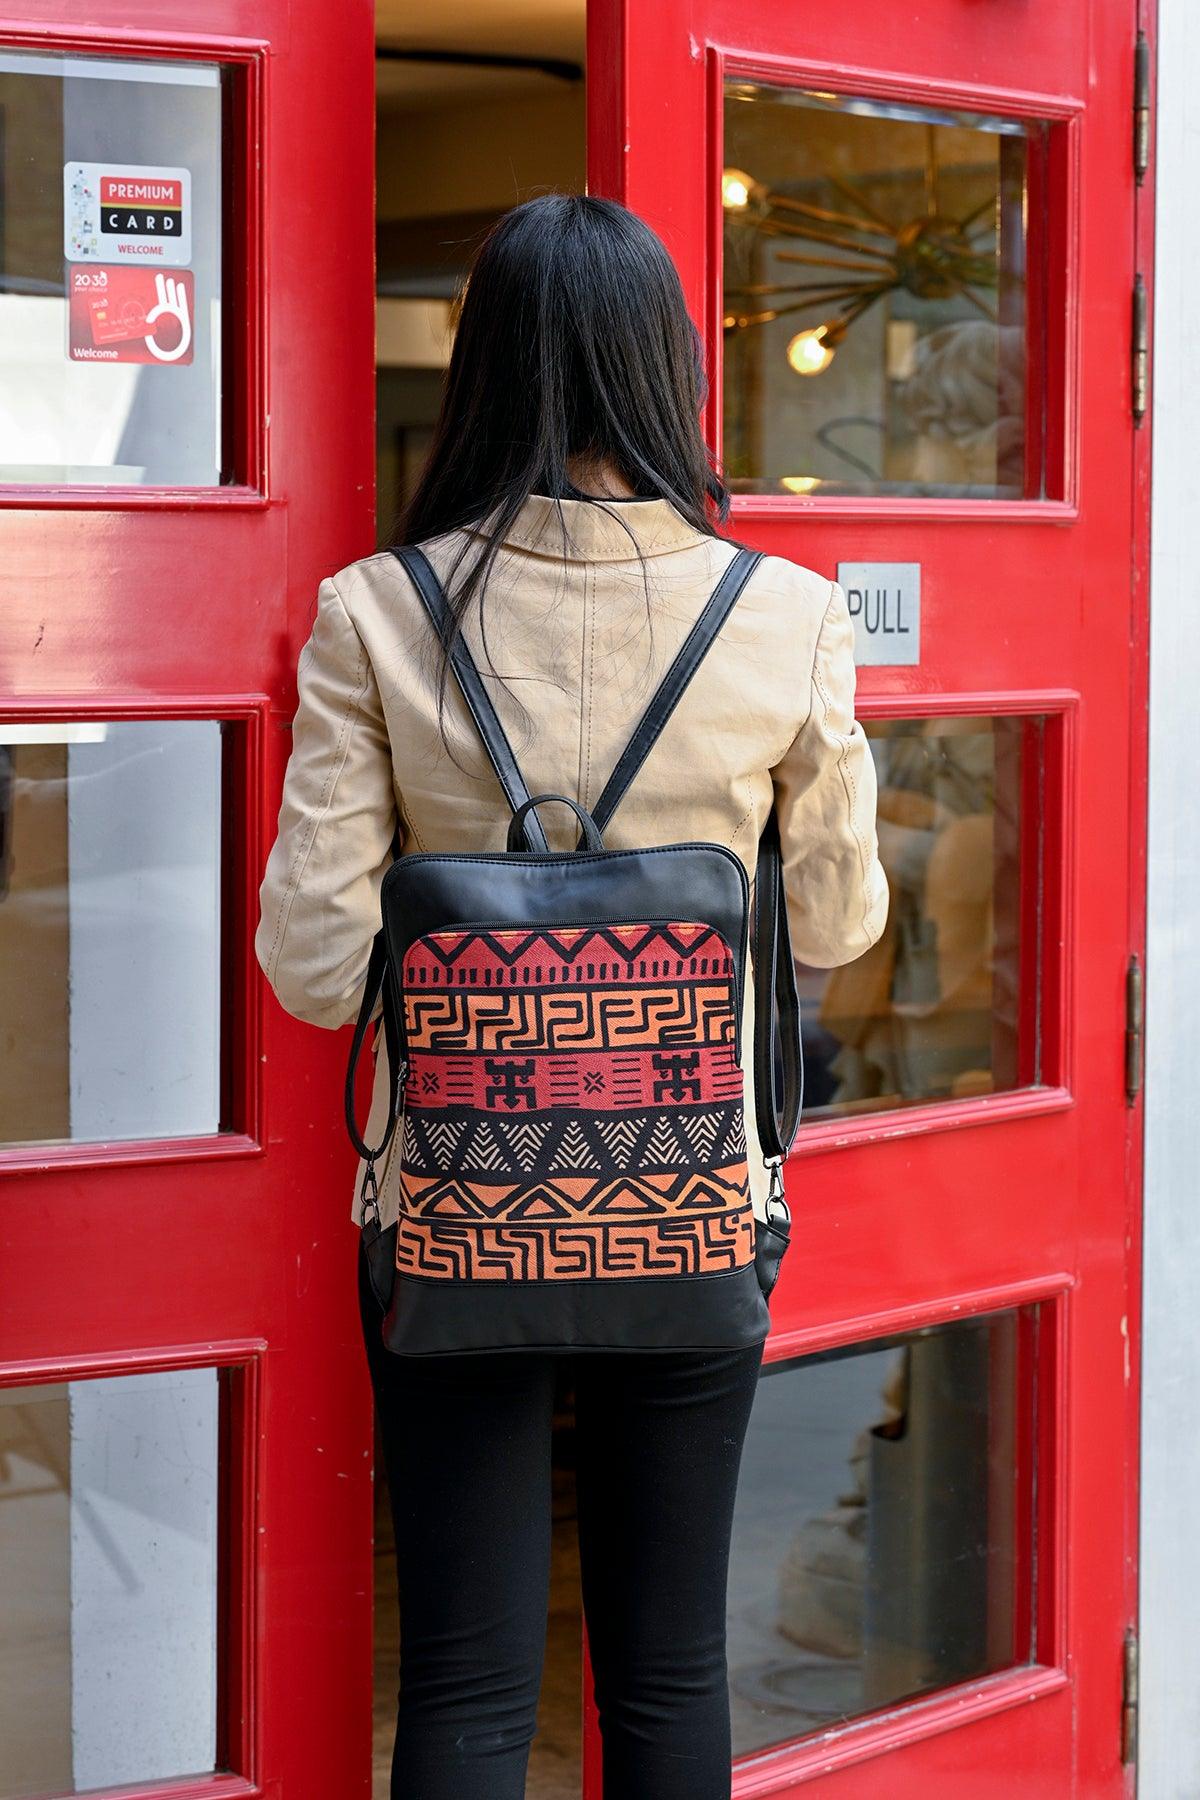 Black Laptop Backpack African Pattern